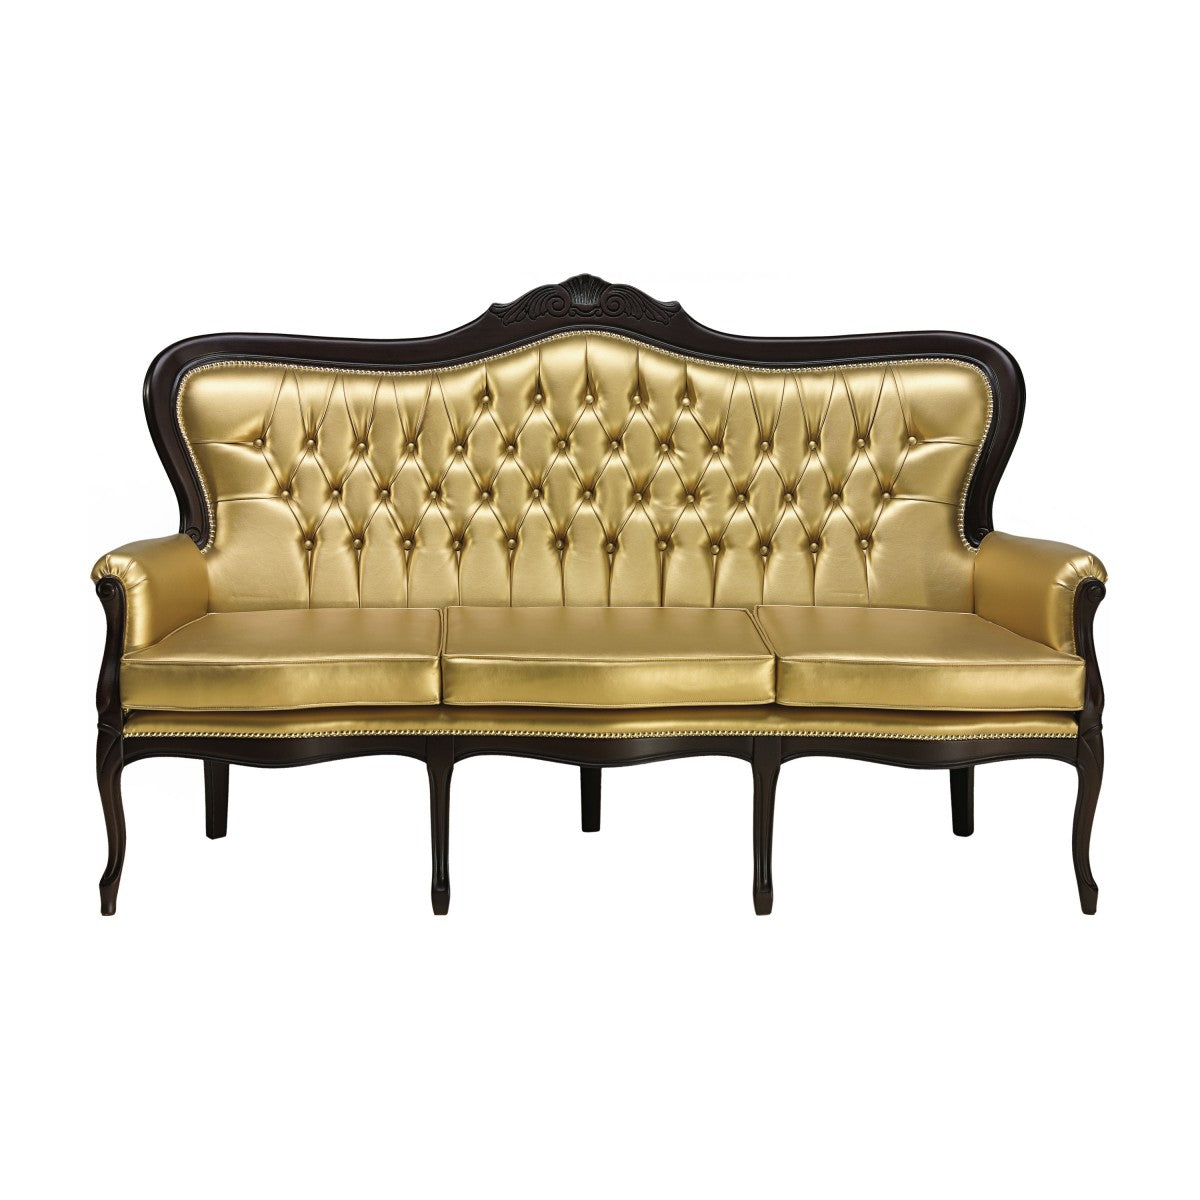 Foglia Bespoke Upholstered Cushion Seat Louis Philippe Style Three Seater Sofa MS9218E Custom Made To Order